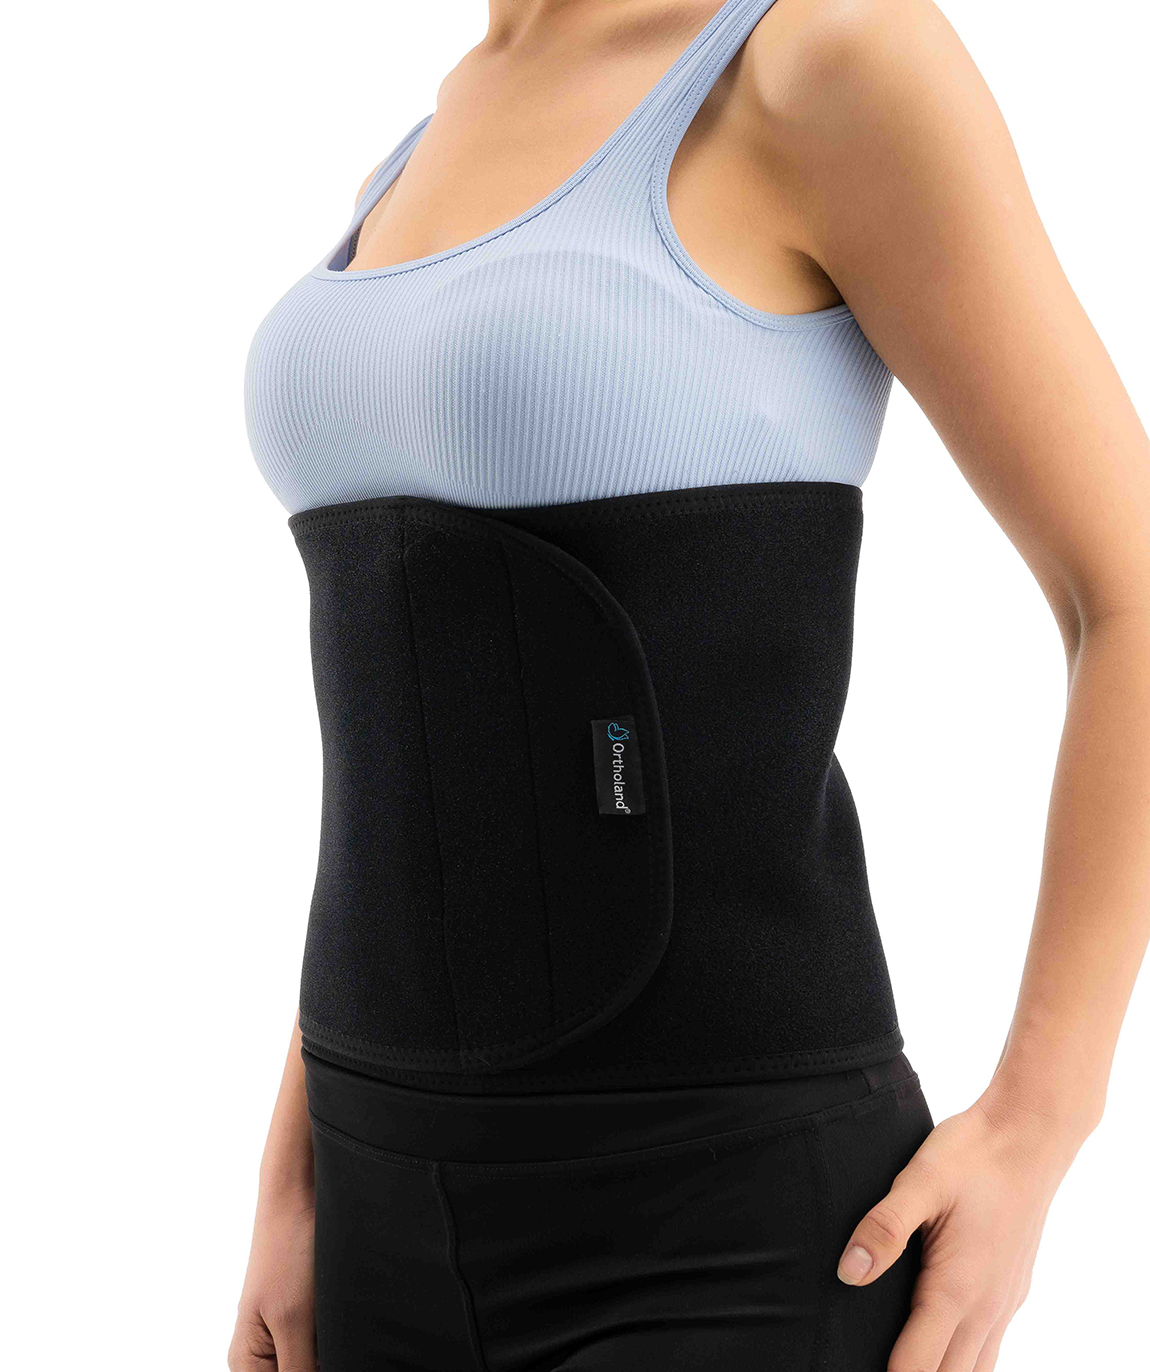 Slimming Corset Unisize (Neoprene Fabric), Waist - back corset